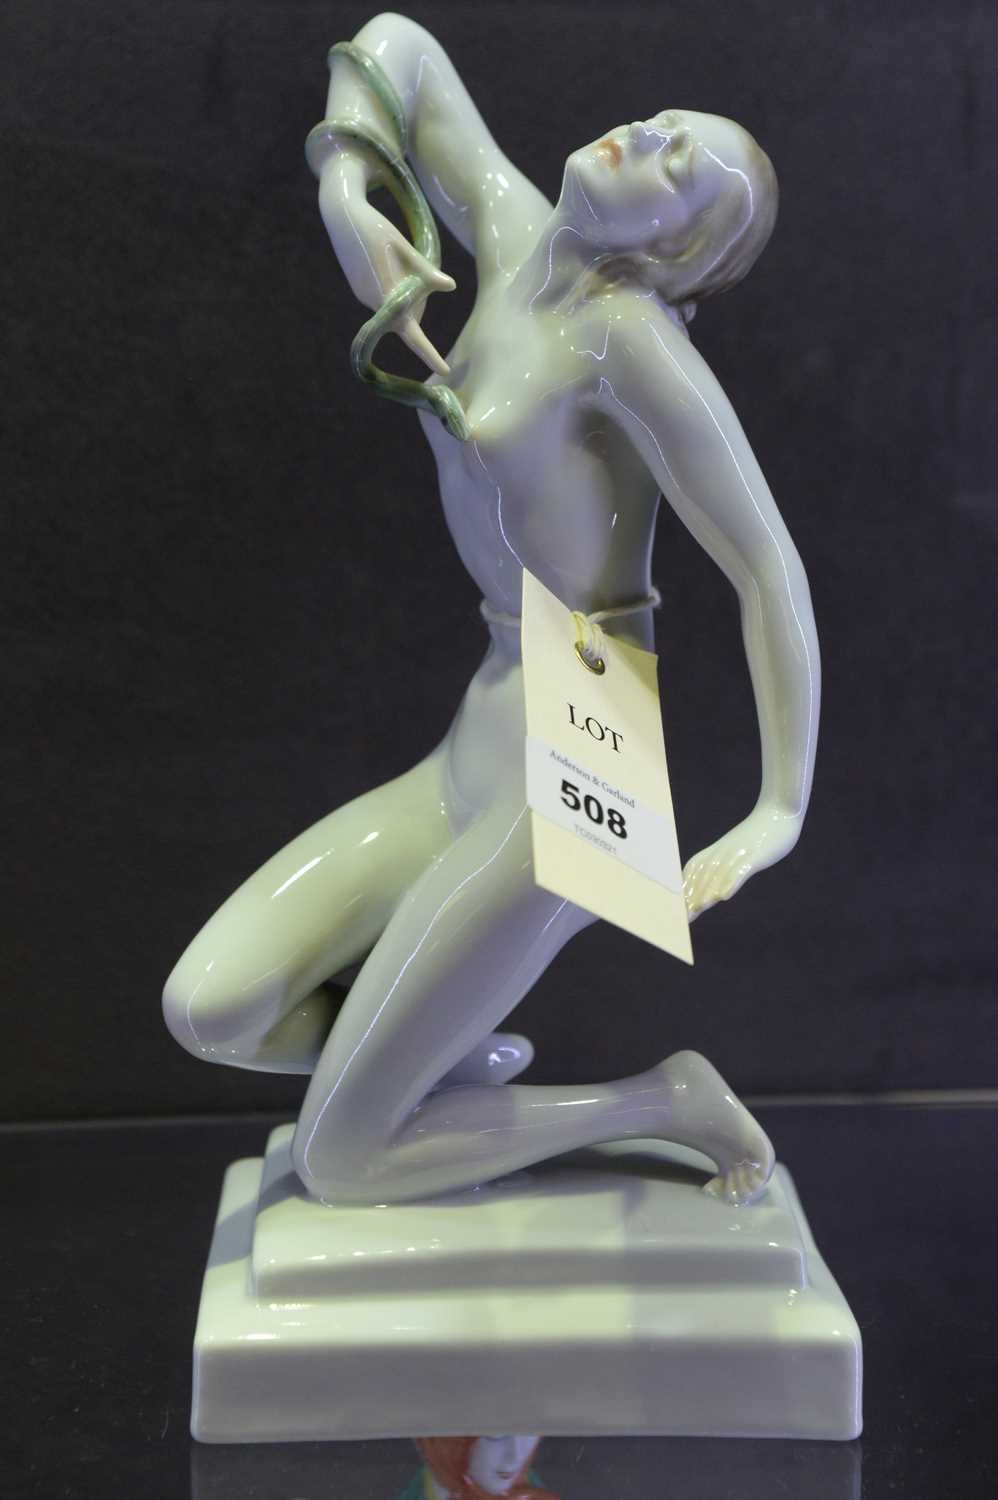 Lot 508 - Herend figurine of a nude female figure